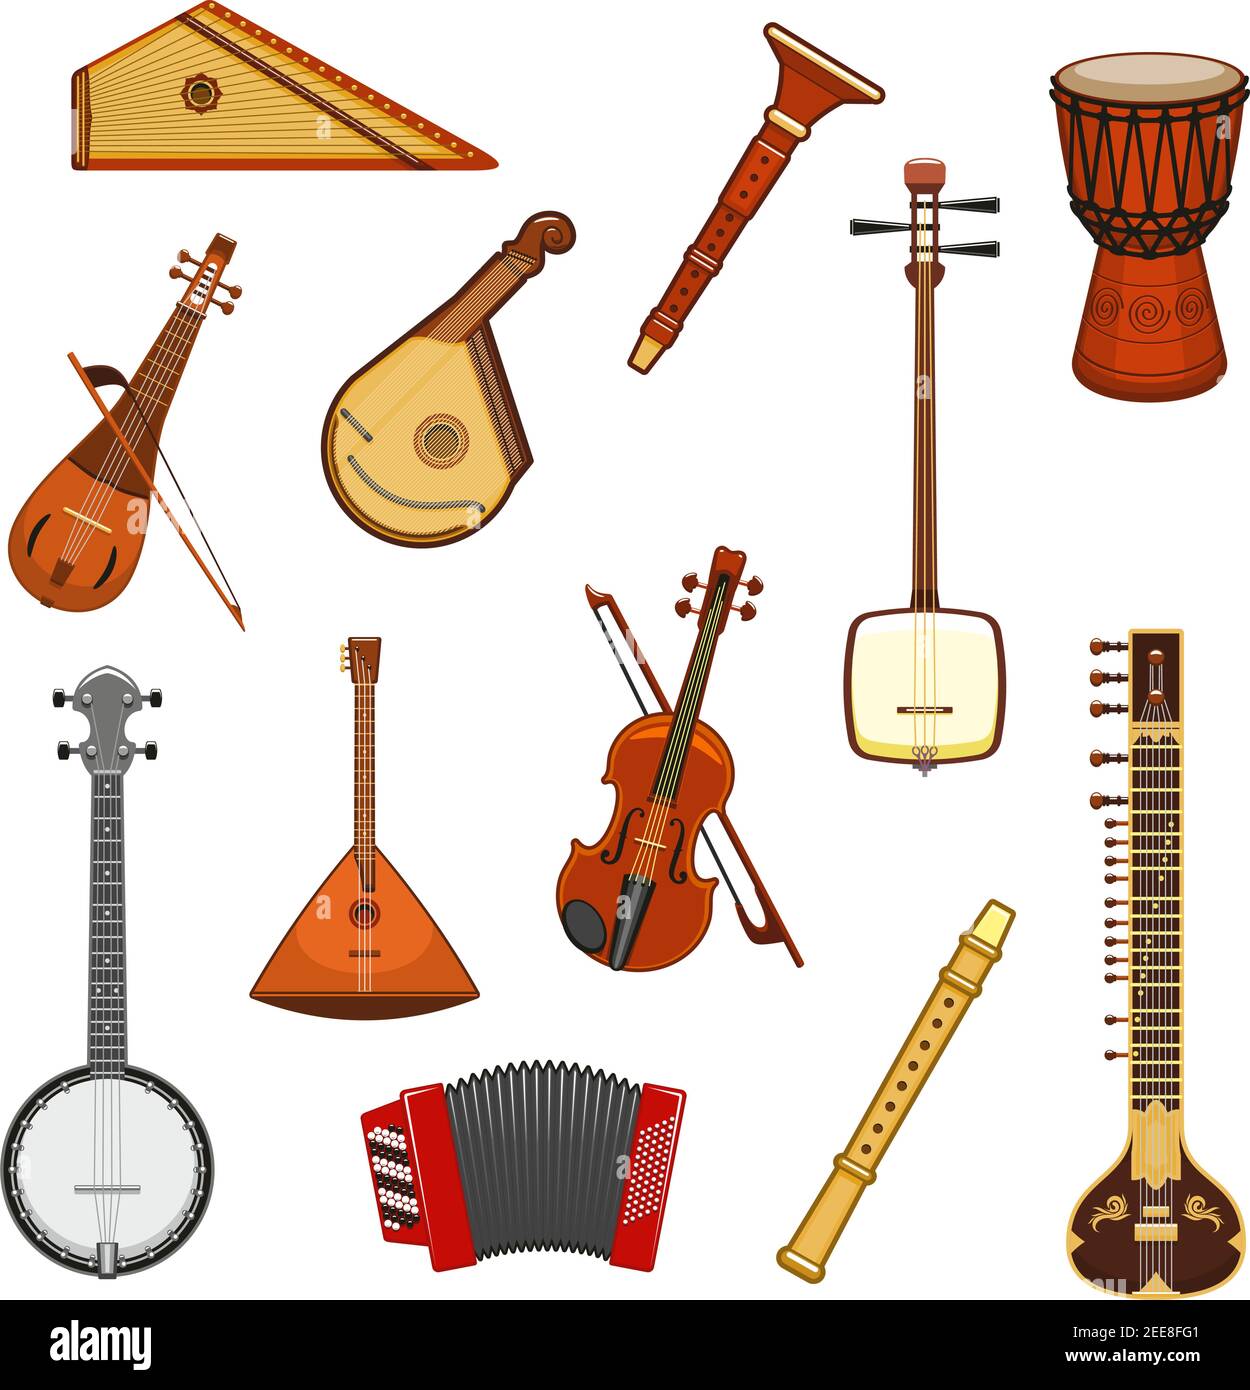 Instrument de musique ensemble d'icônes isolées d'instruments de musique  classiques et ethniques. Violon, mandoline, banjo, tambour djembe,  balalaika, sitar, flûte, accordéon Image Vectorielle Stock - Alamy